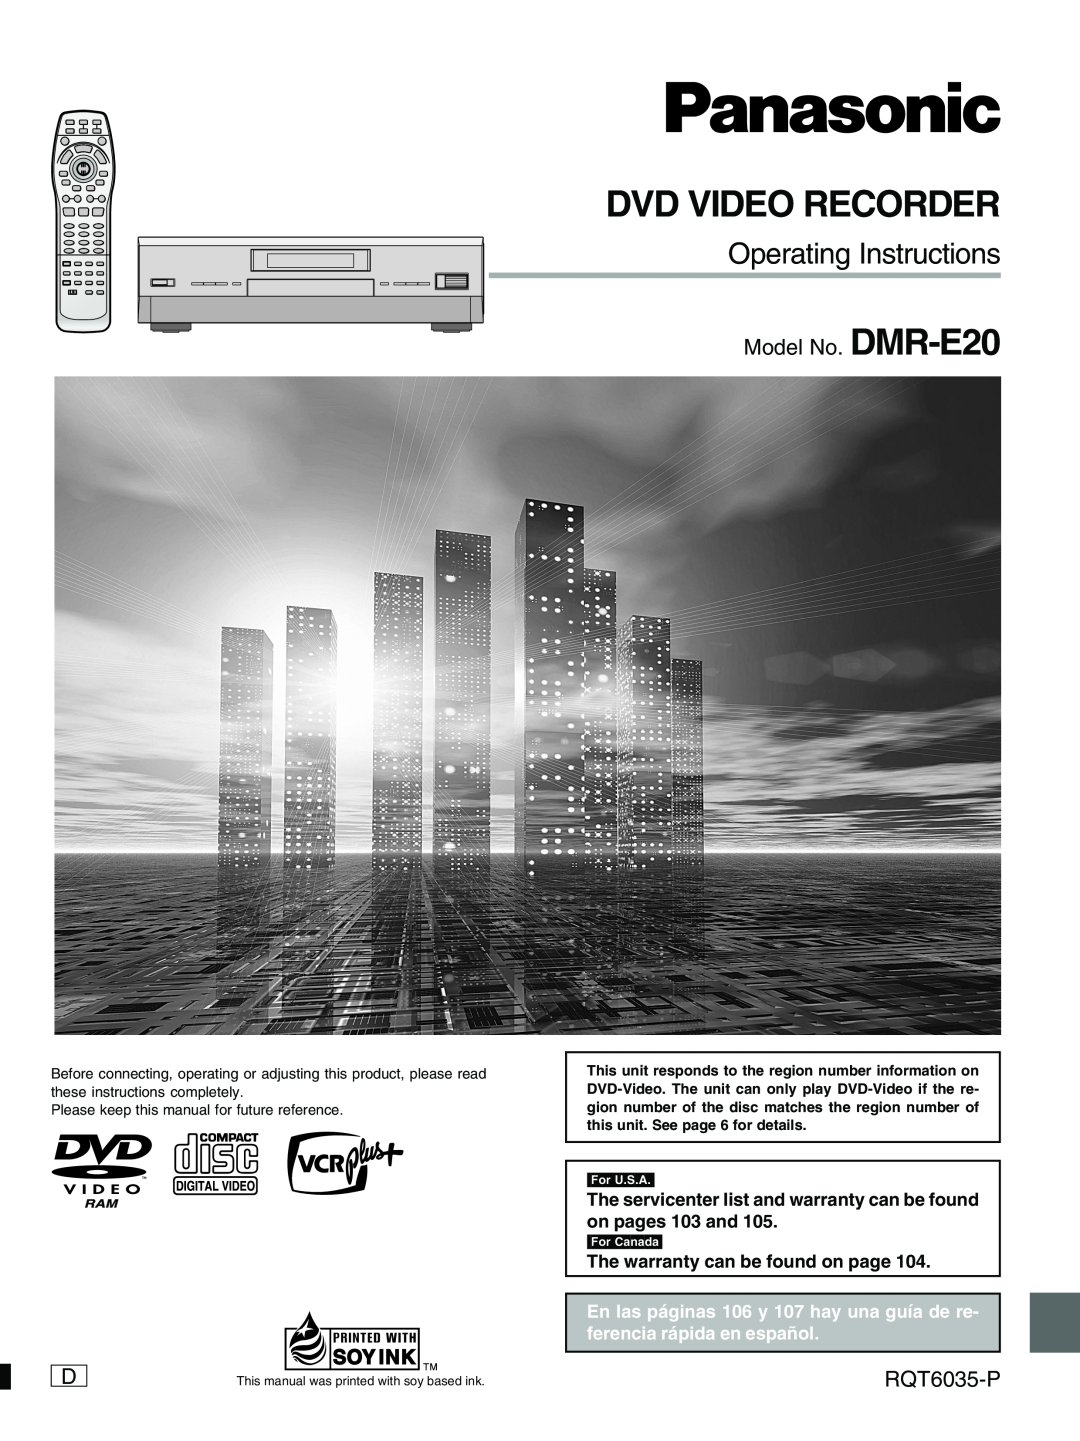 Panasonic warranty Dvd Video Recorder, Operating Instructions, Model No. DMR-E20, RQT6035-P 